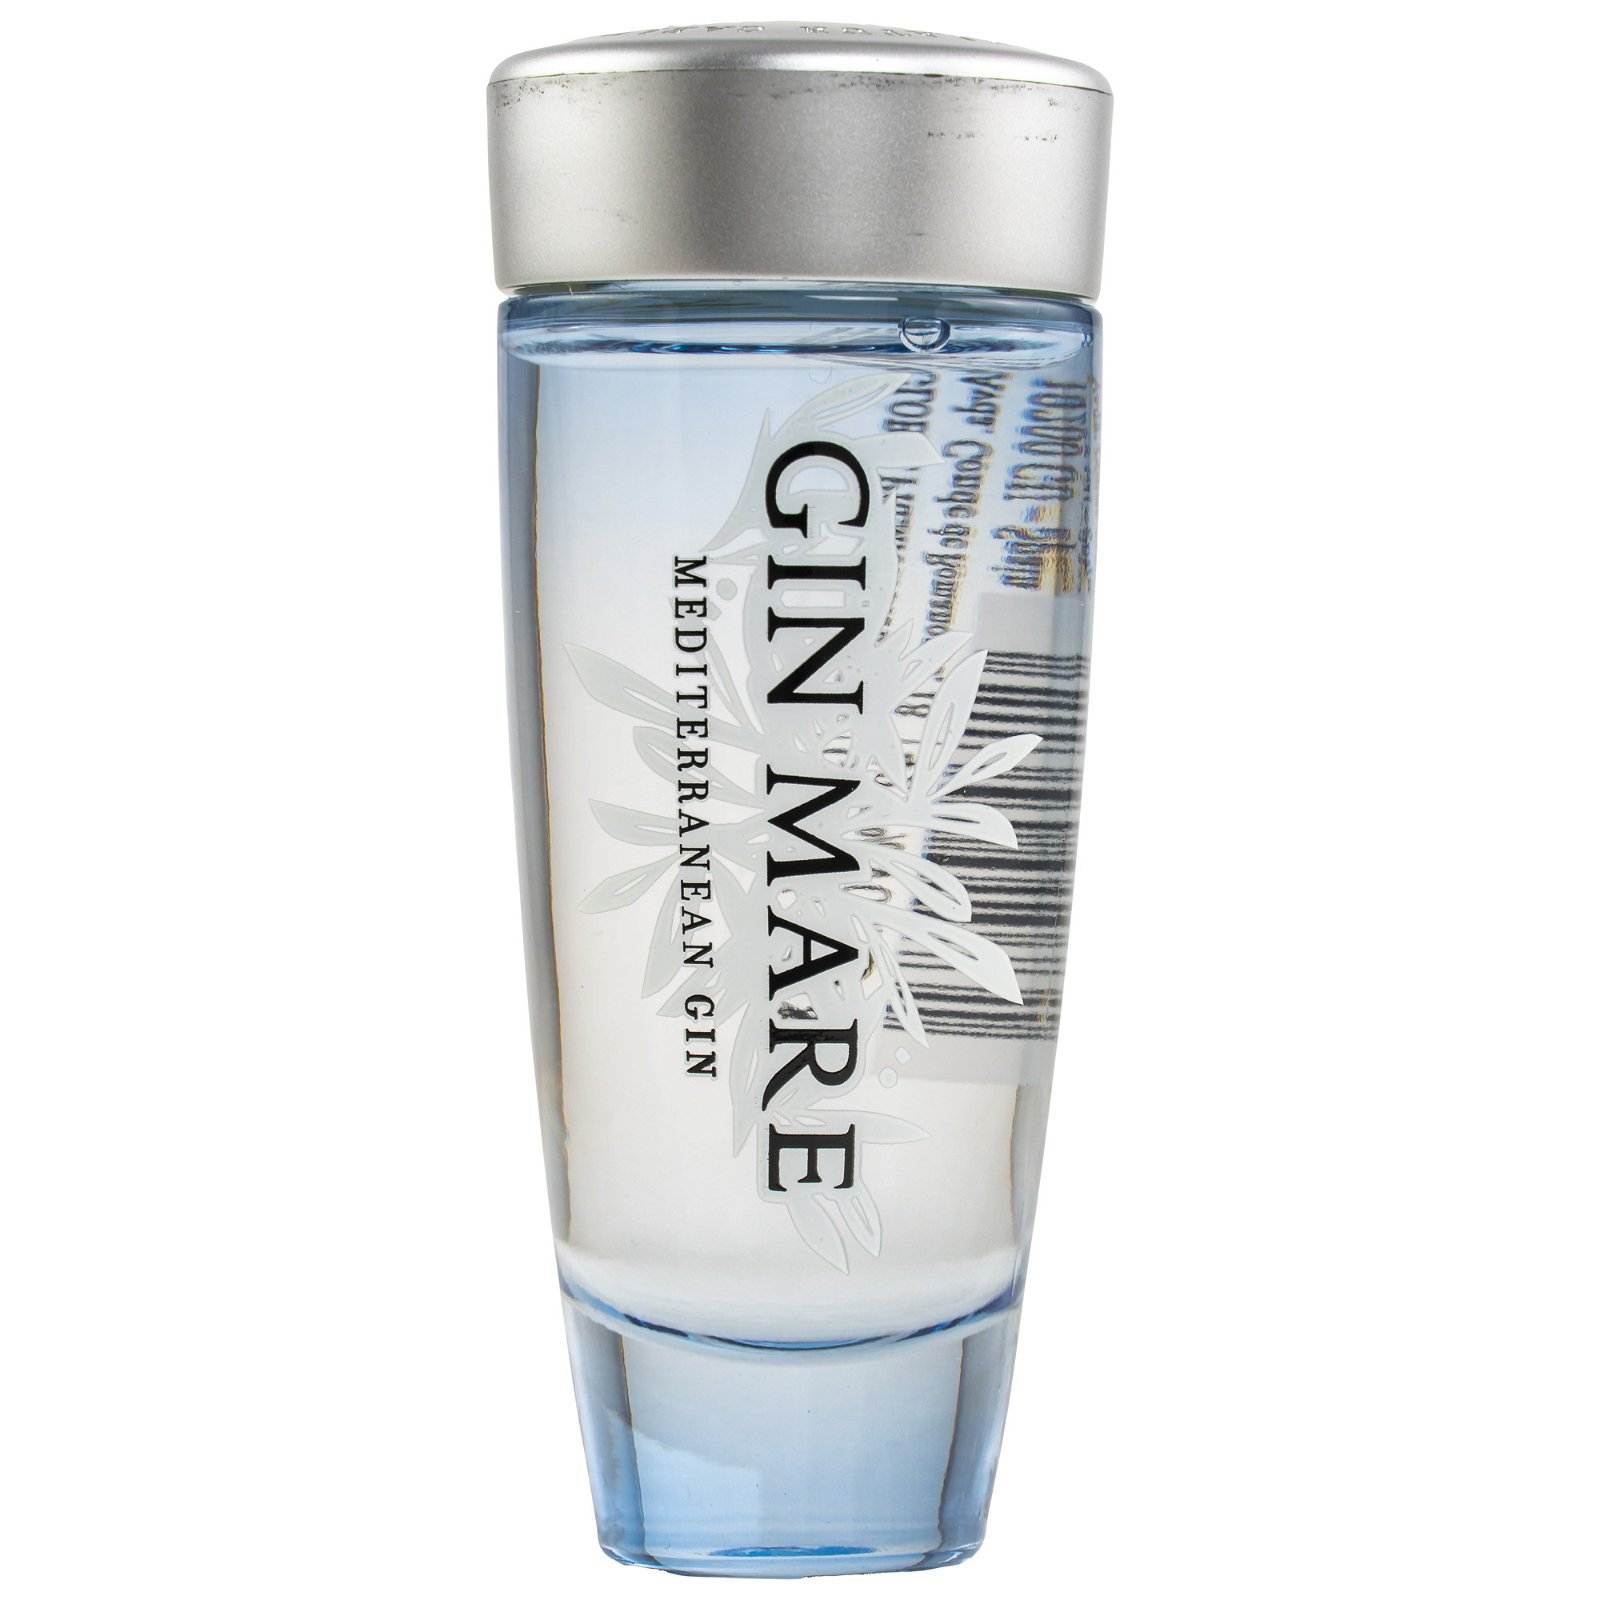 Gin Mare Mediterranean Gin (Miniatur)